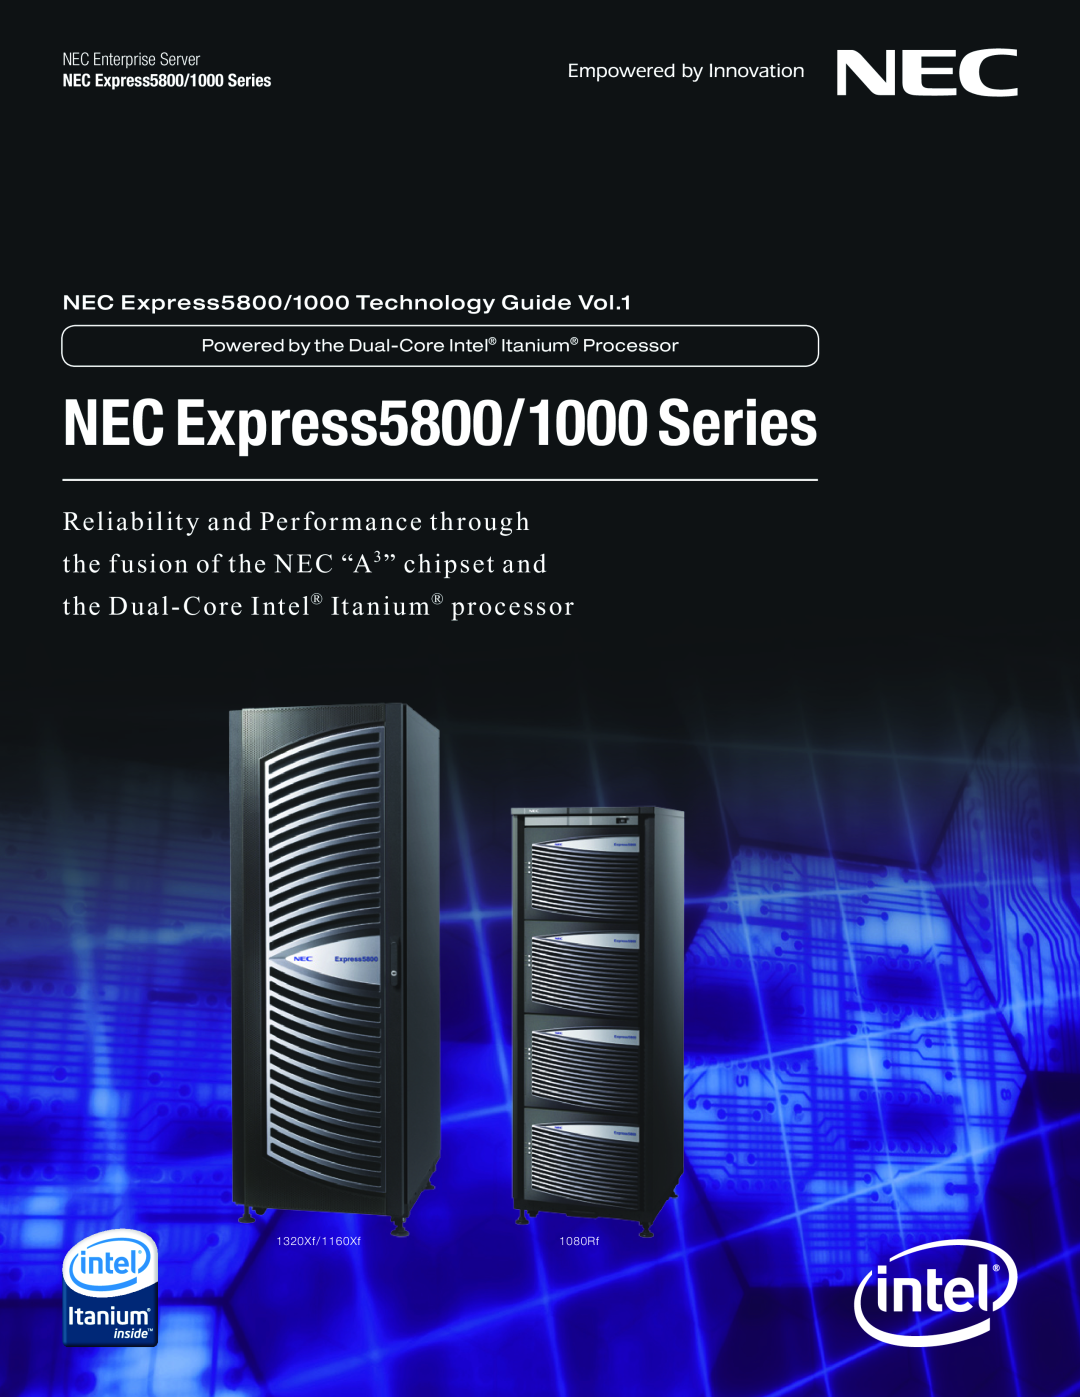 NEC 5800 Series manual NEC Express5800/1000 Series, NEC Express5800/1000 Technology Guide Vol.1, NEC Enterprise Server 